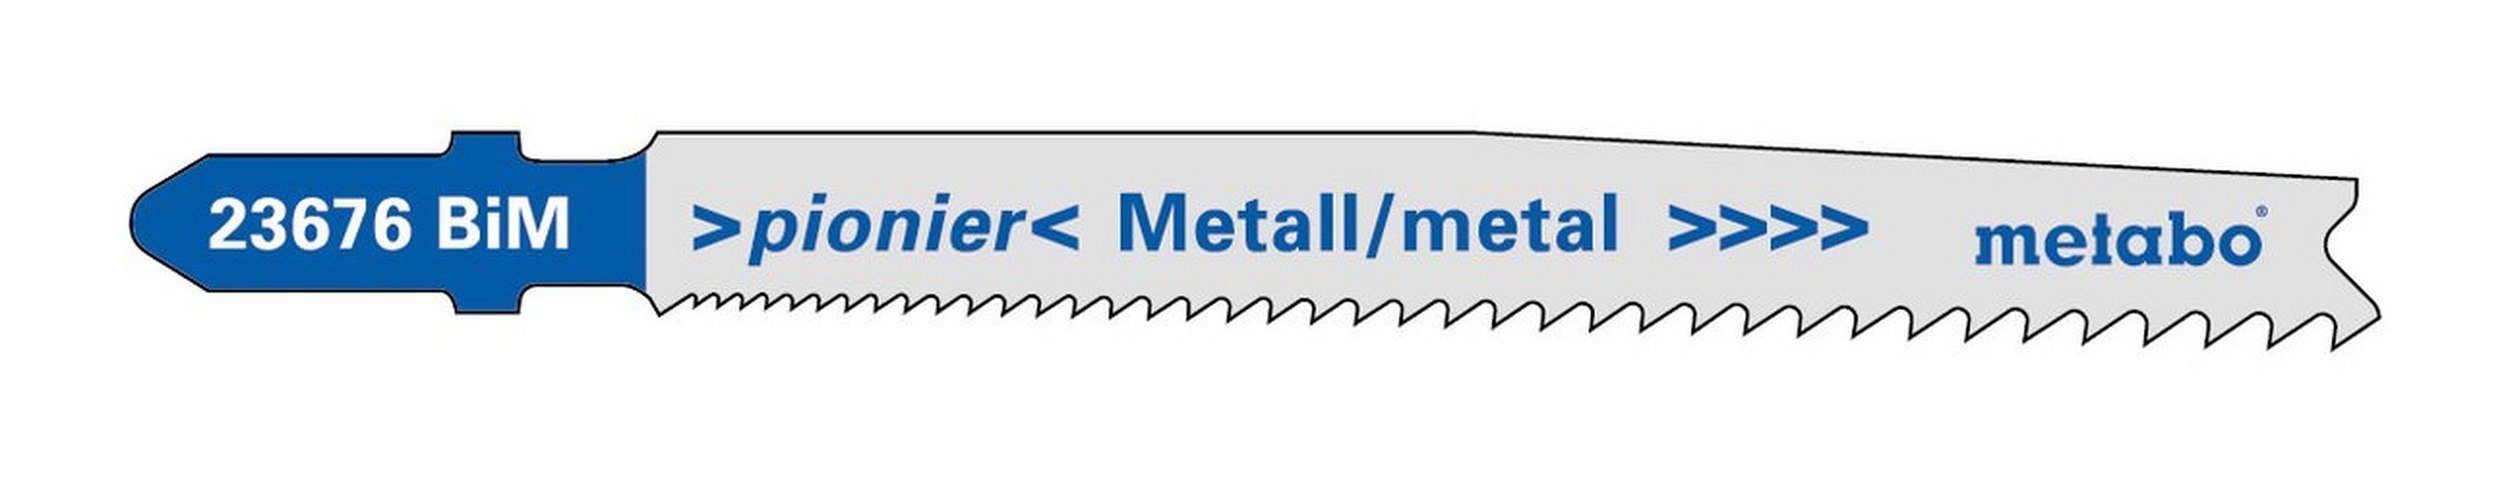 mm Stück), pionier Metall Stichsägeblatt Stichsägeblätter metabo BiM progressiv Serie (5 74